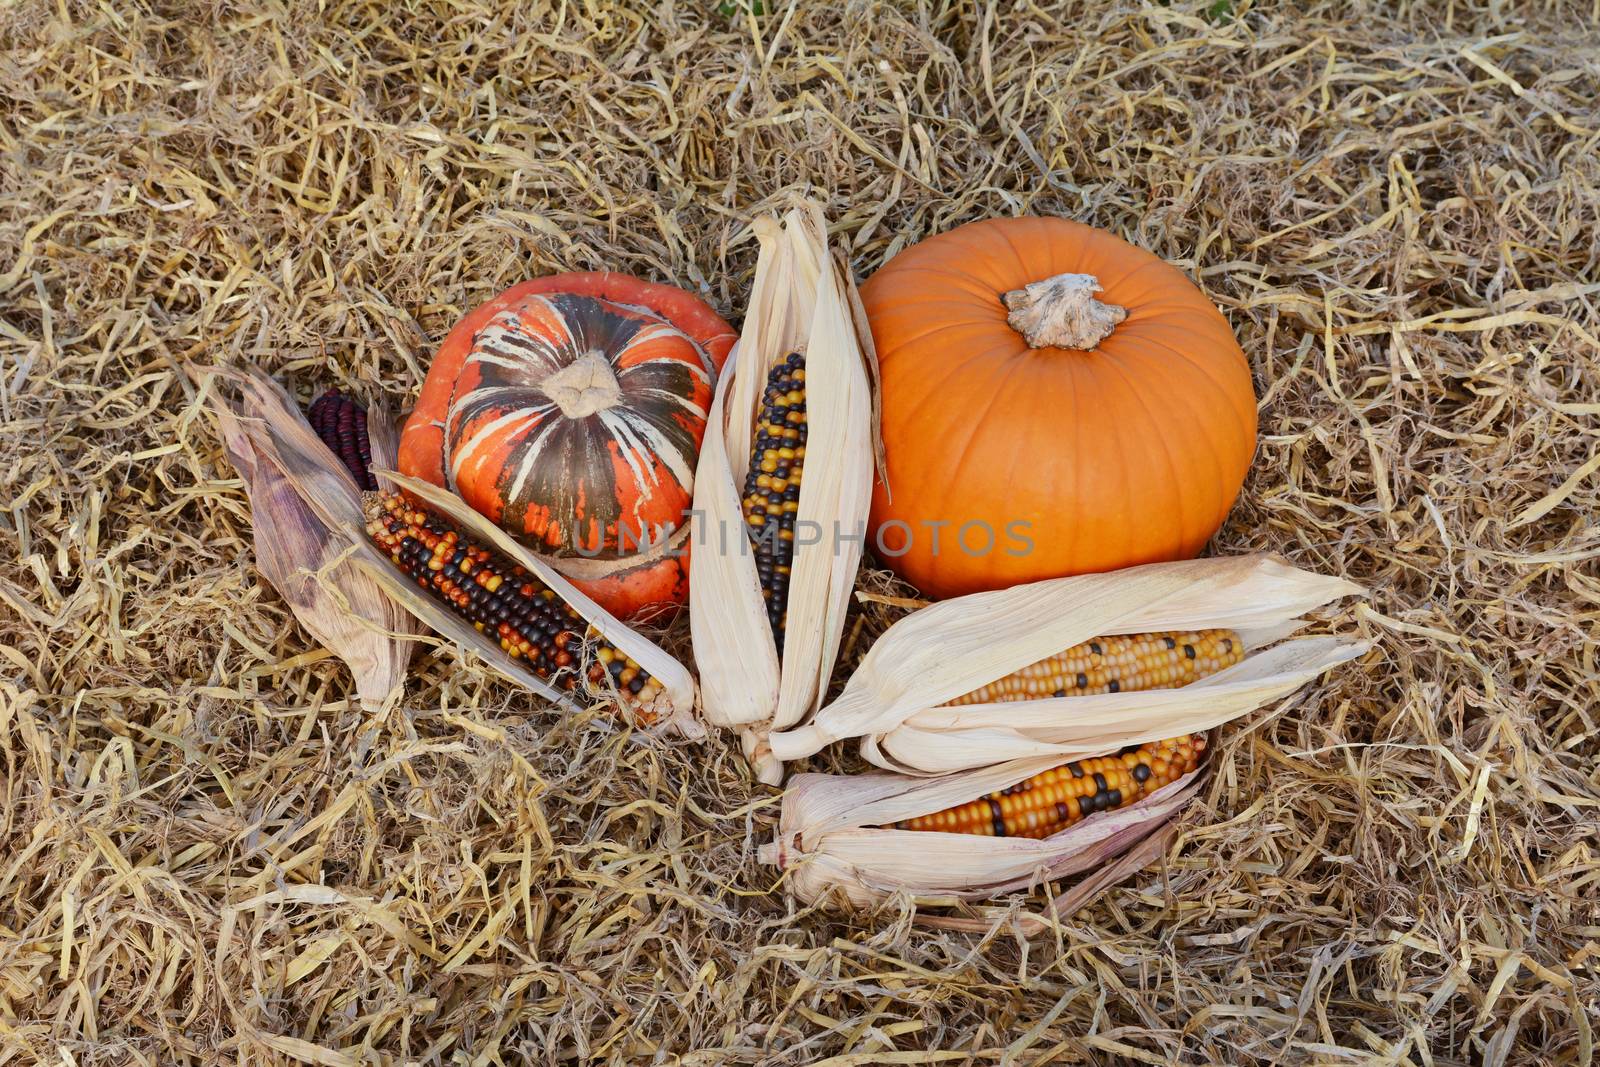 Ornamental corn cobs with fall gourds - Turks Turban and orange pumpkin on hay